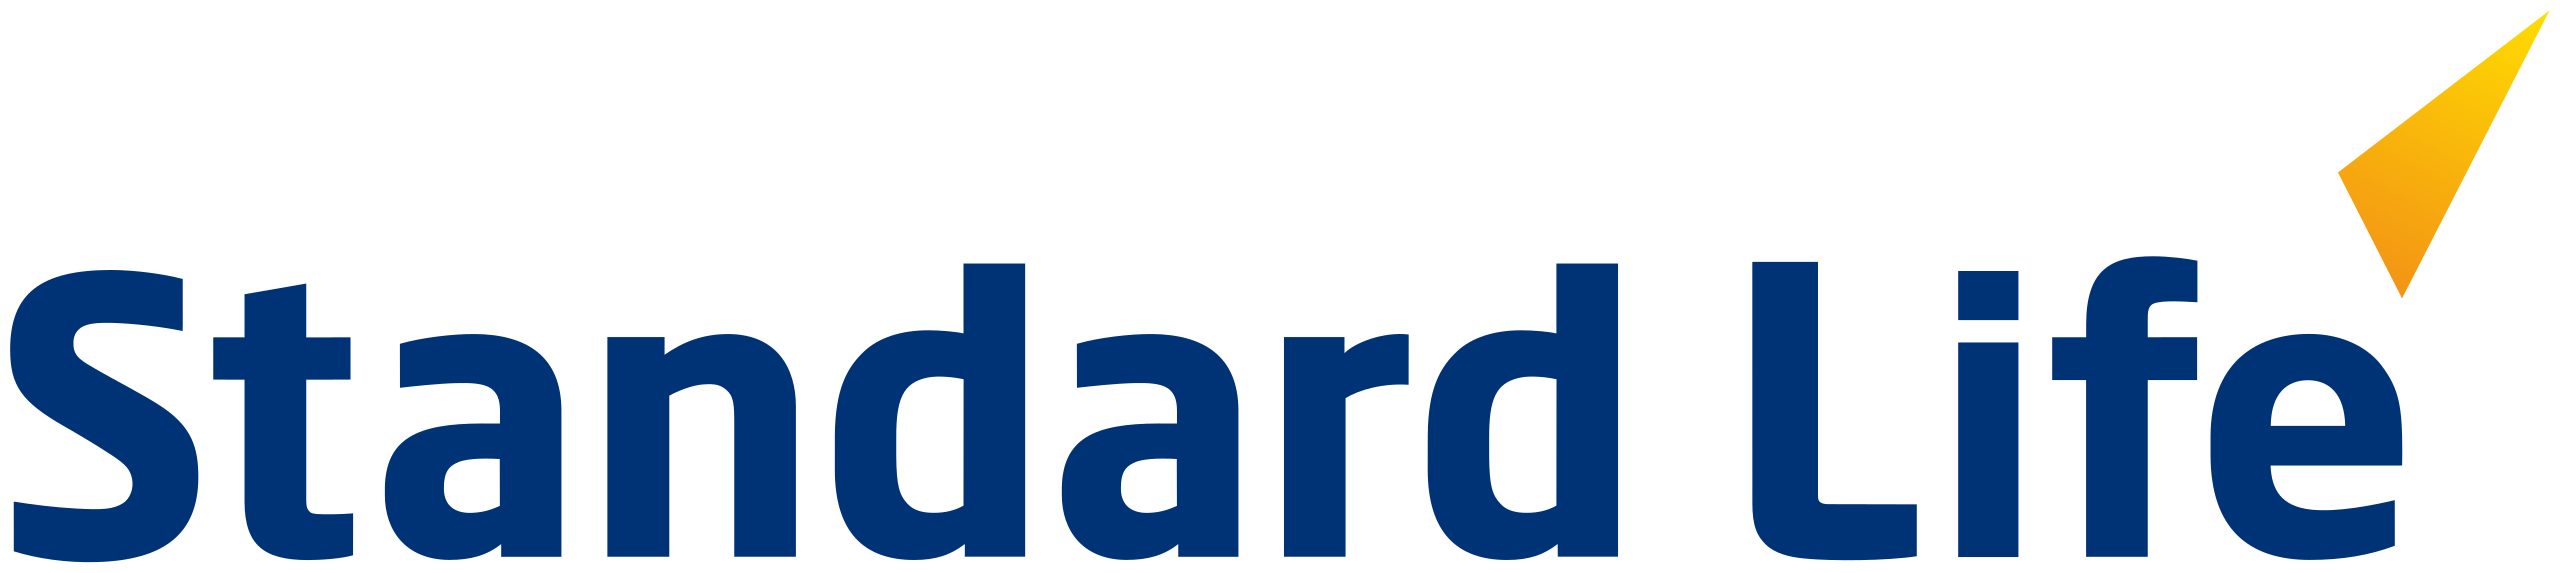 Standard Life Logo.